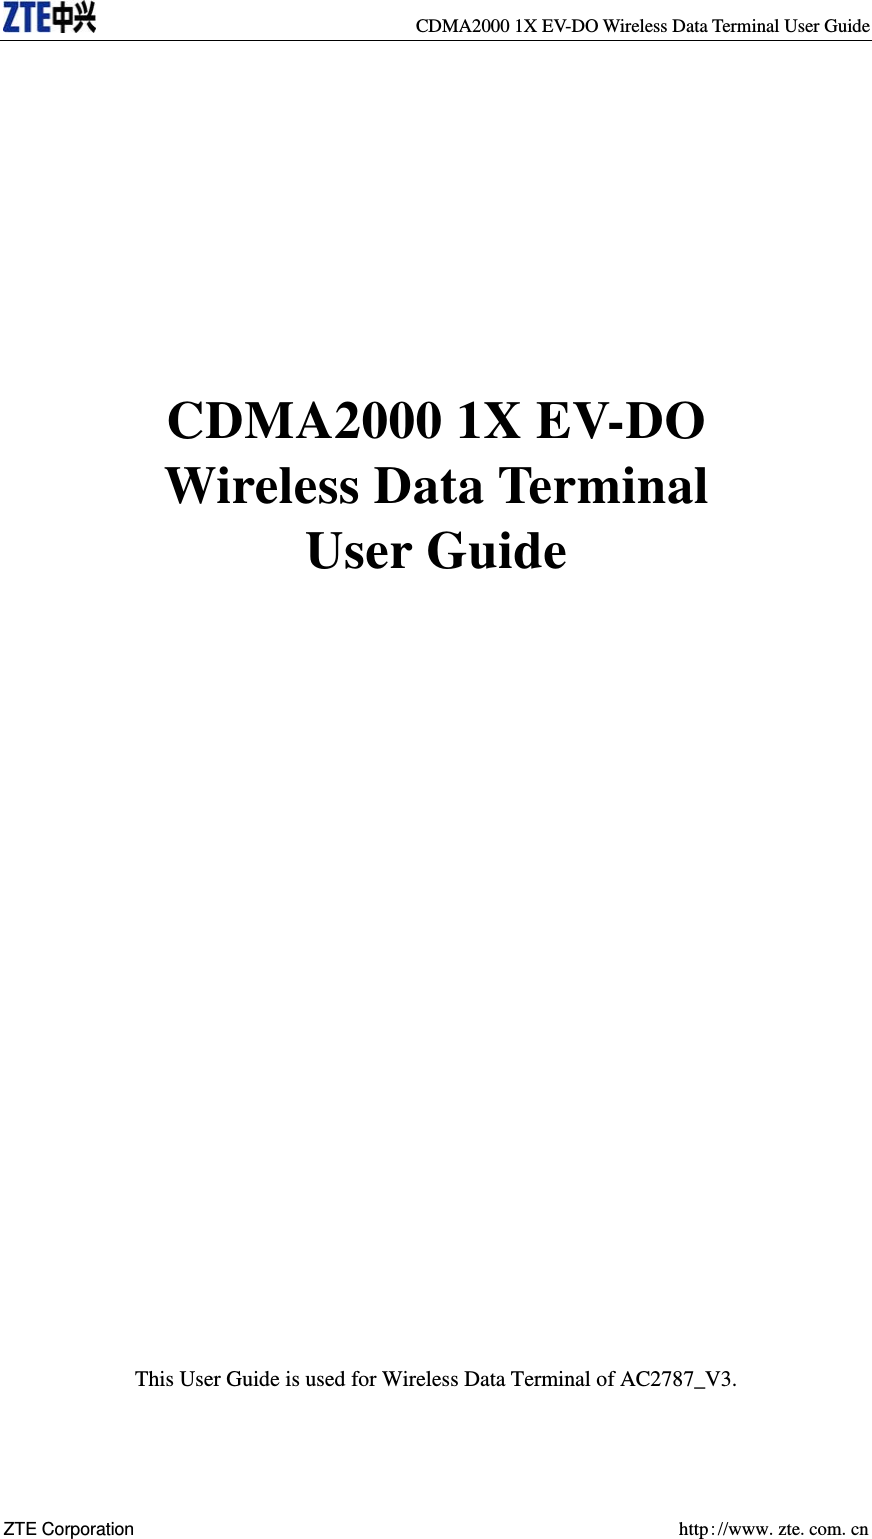   CDMA2000 1X EV-DO Wireless Data Terminal User Guide ZTE Corporation  http://www.zte.com.cn        CDMA2000 1X EV-DO Wireless Data Terminal User Guide                         This User Guide is used for Wireless Data Terminal of AC2787_V3. 